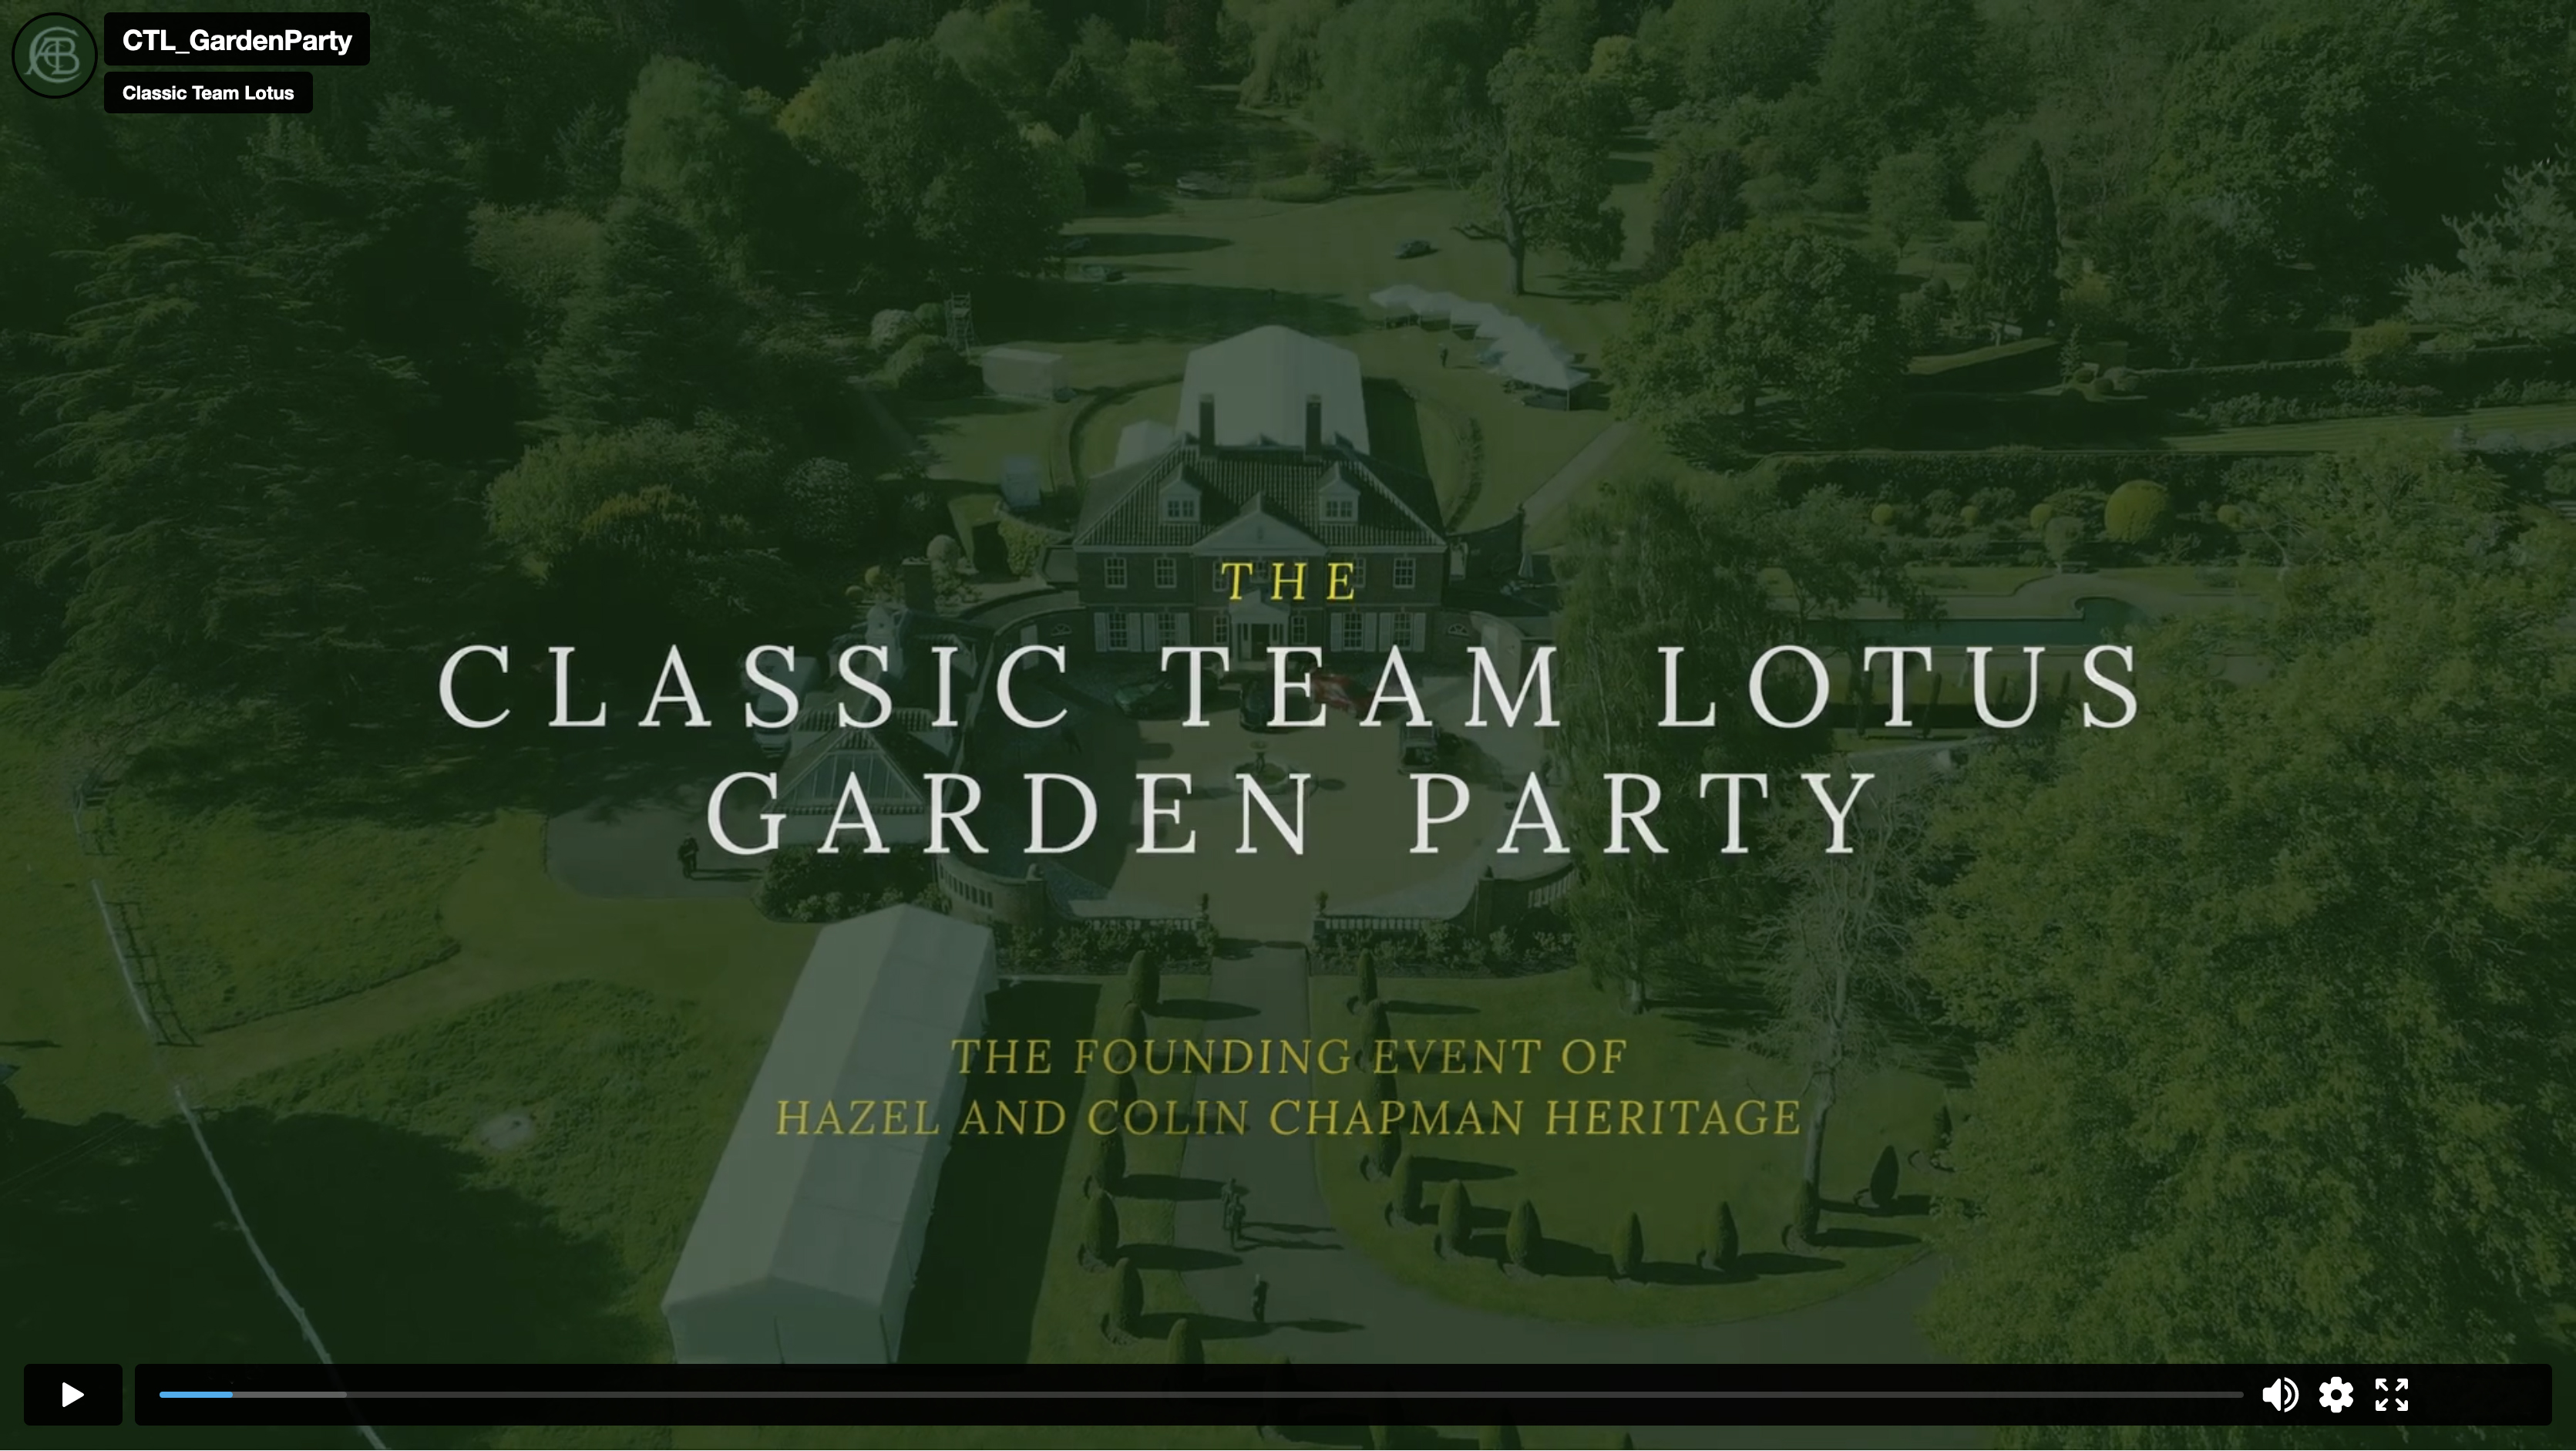 Film of Classic Team Lotus garden party released